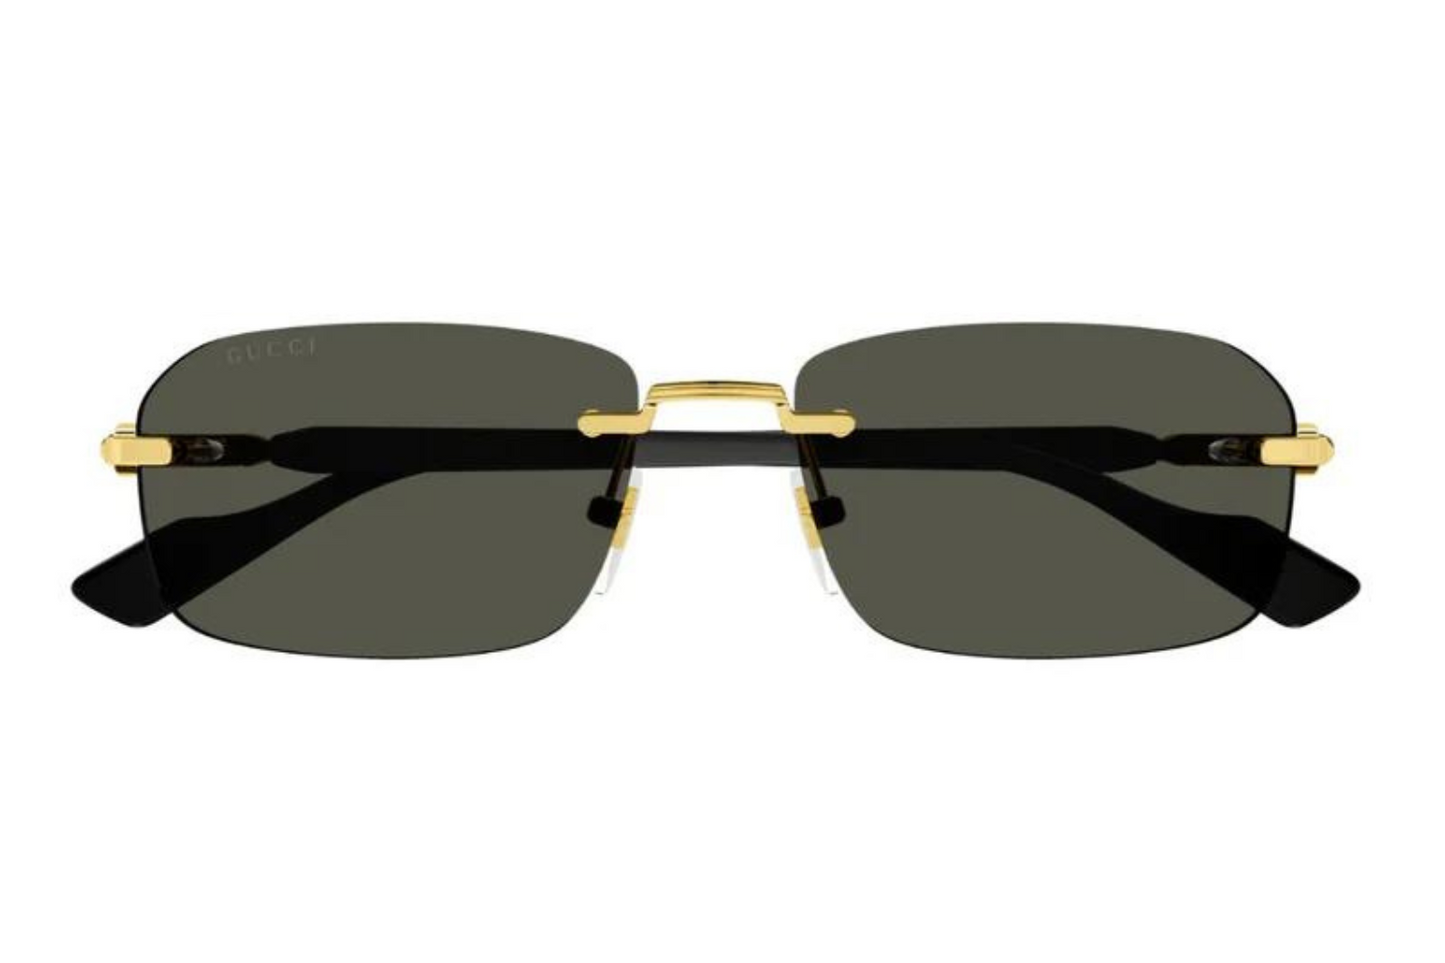 Sunglasses GG 1221S 001